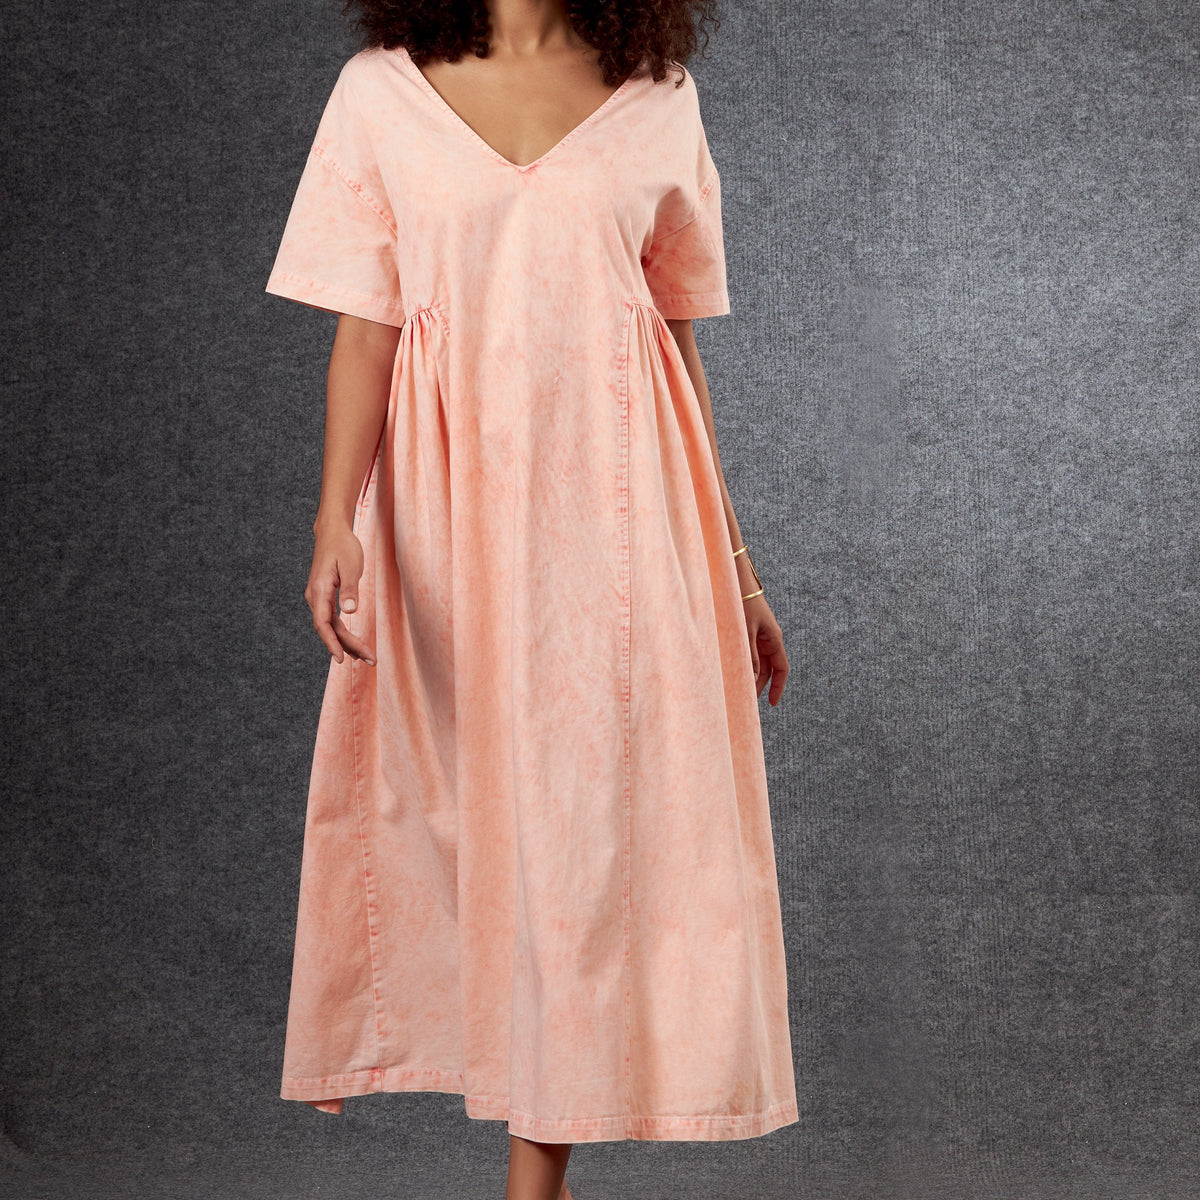 Vogue V1799 Misses' Dress sewing pattern — jaycotts.co.uk - Sewing Supplies